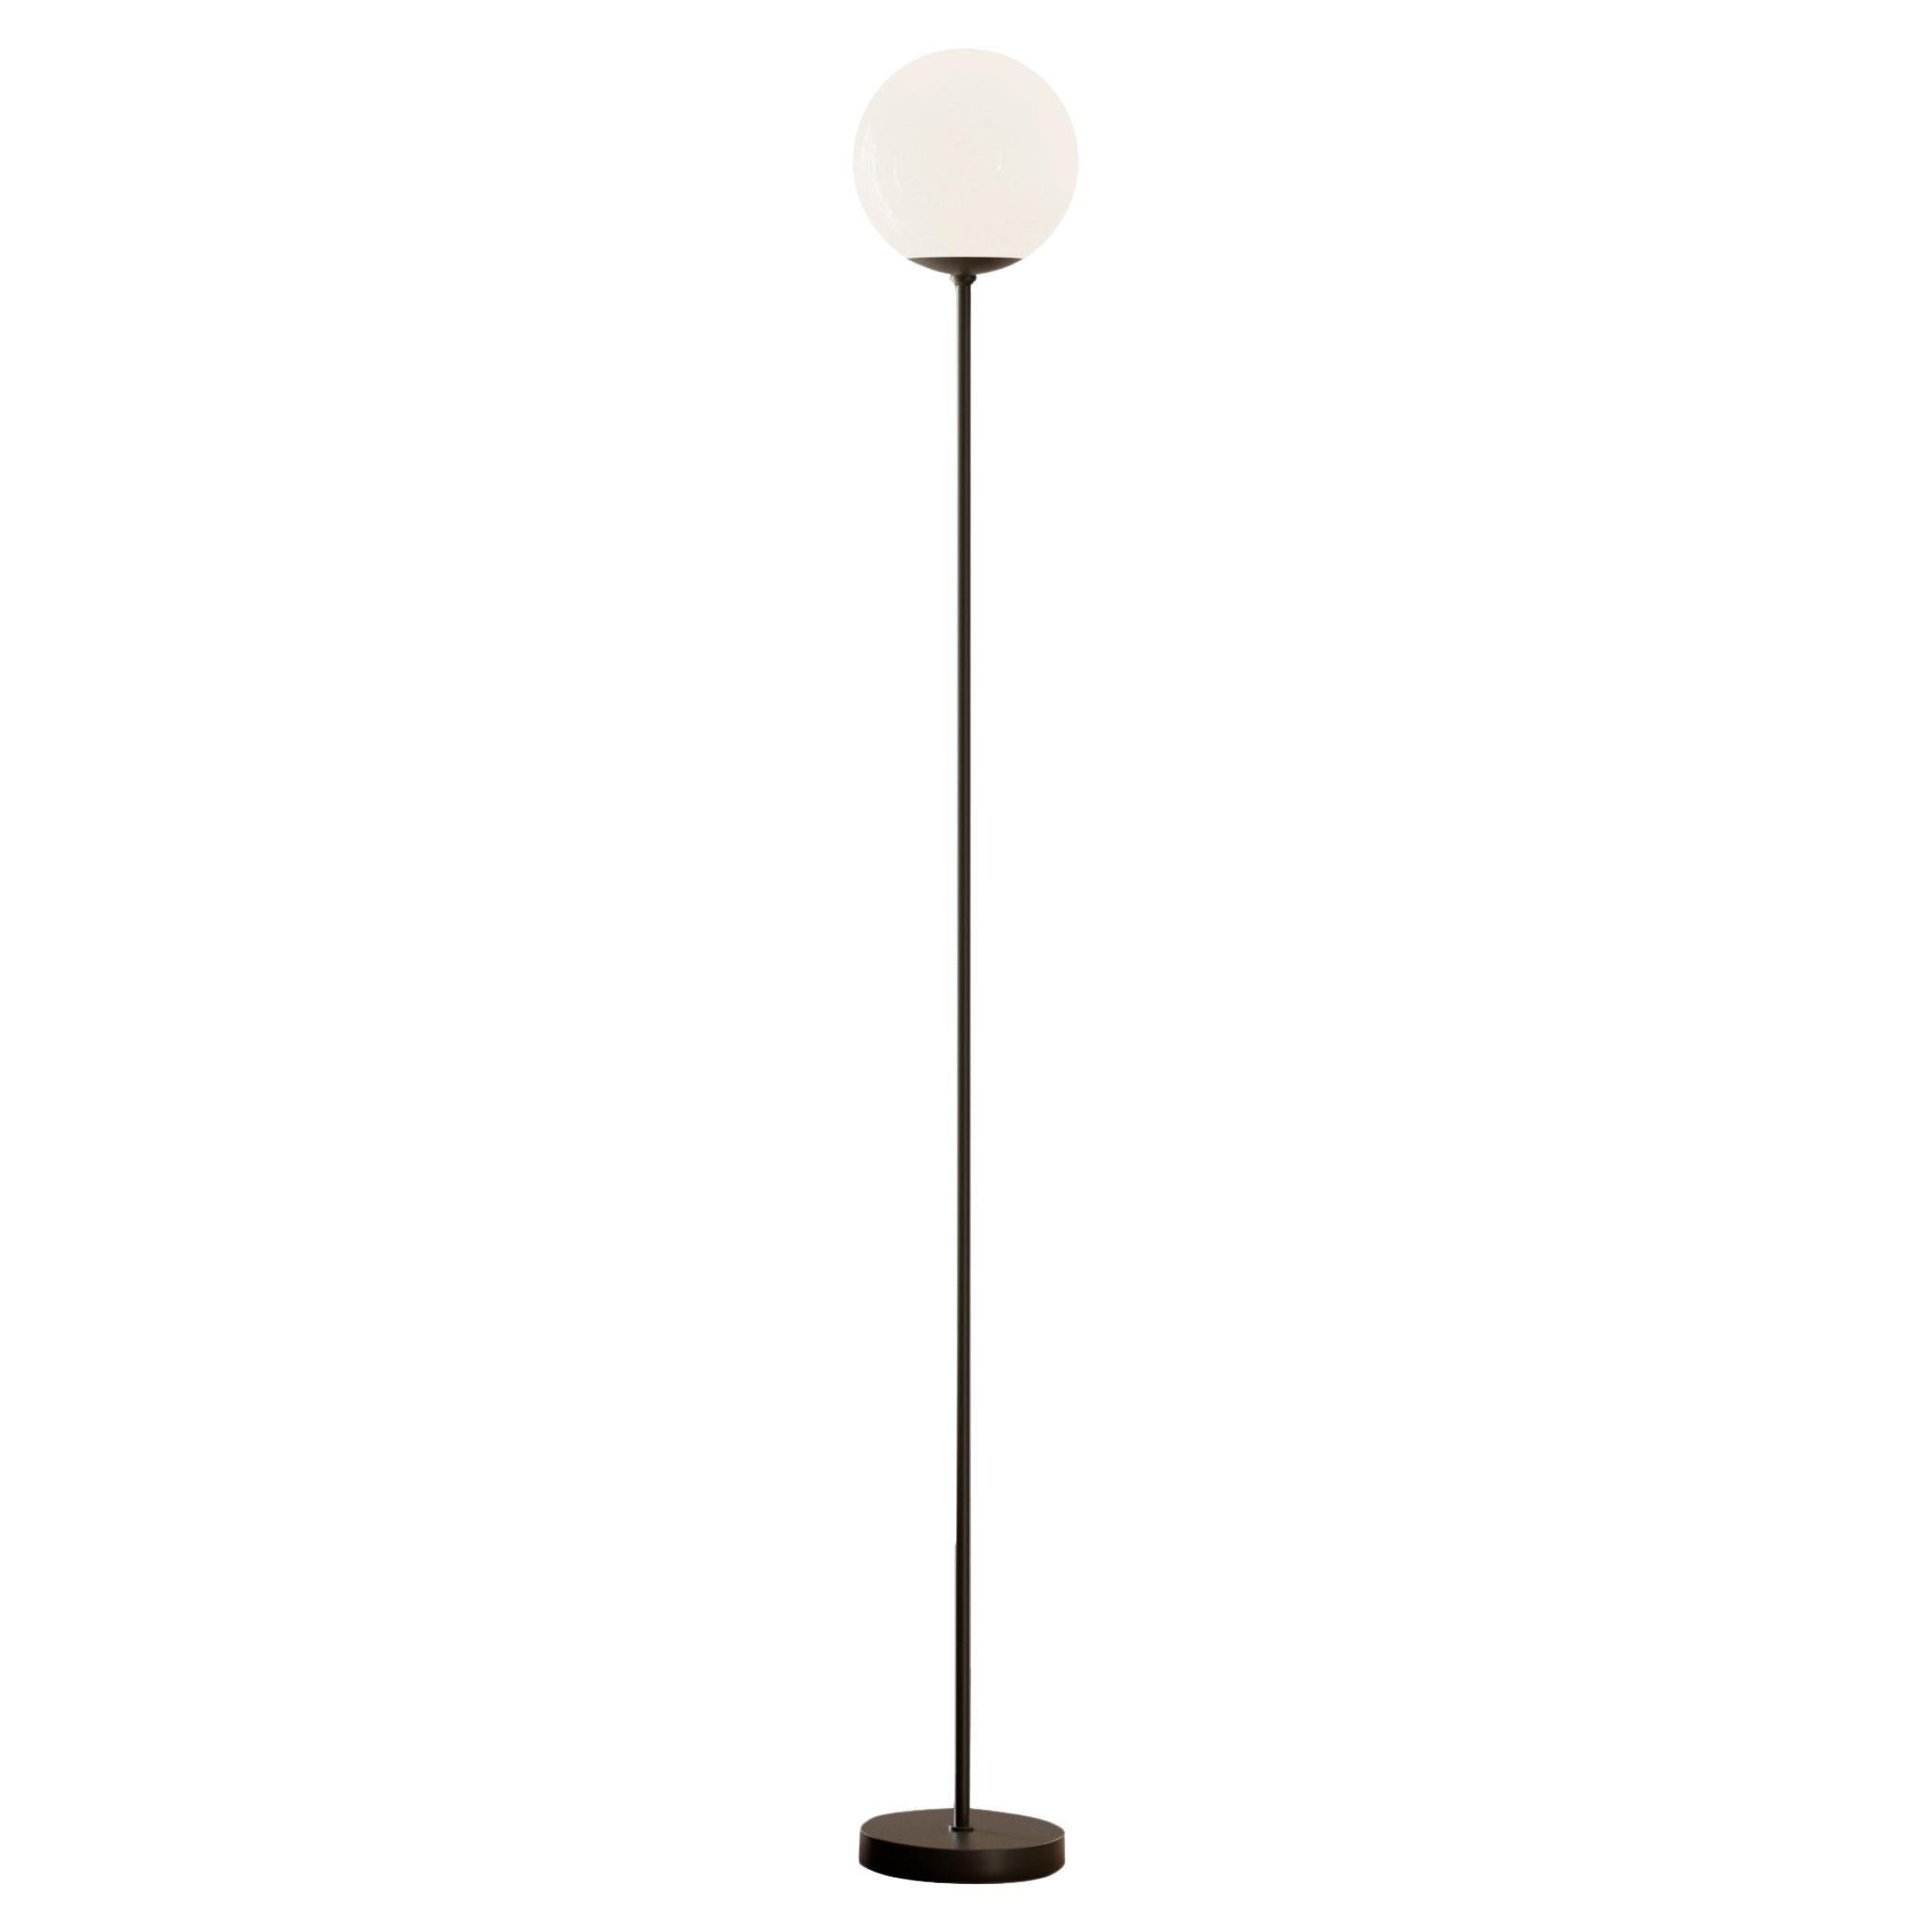 Gino Sarfatti Model 1081 Floor Lamp for Astep